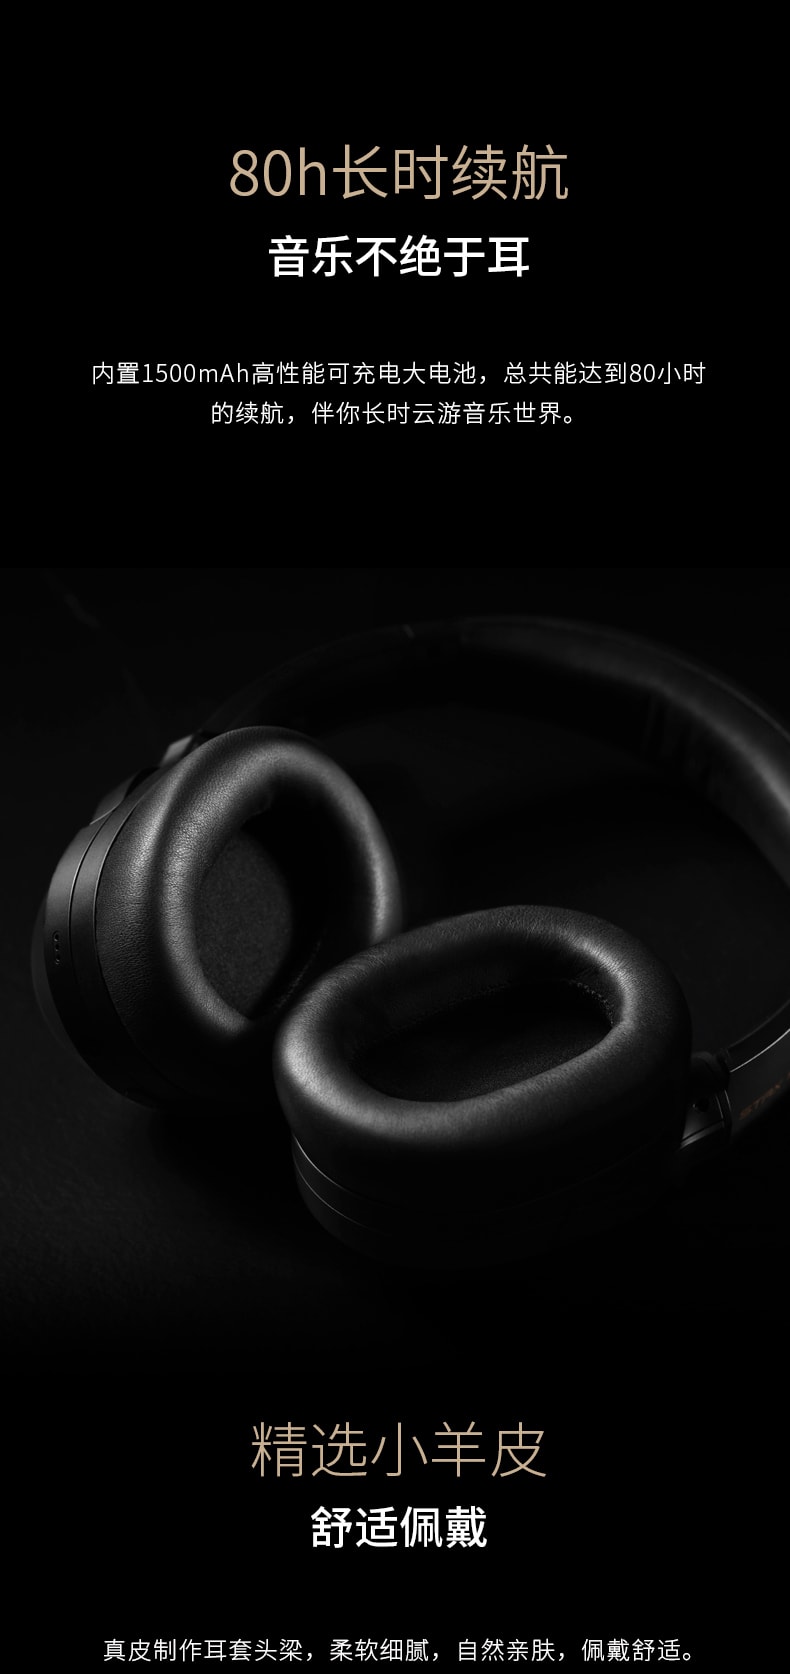 Edifier 漫步者  STAX SPIRIT S3 头戴式蓝牙耳机HIFI耳机 黑色